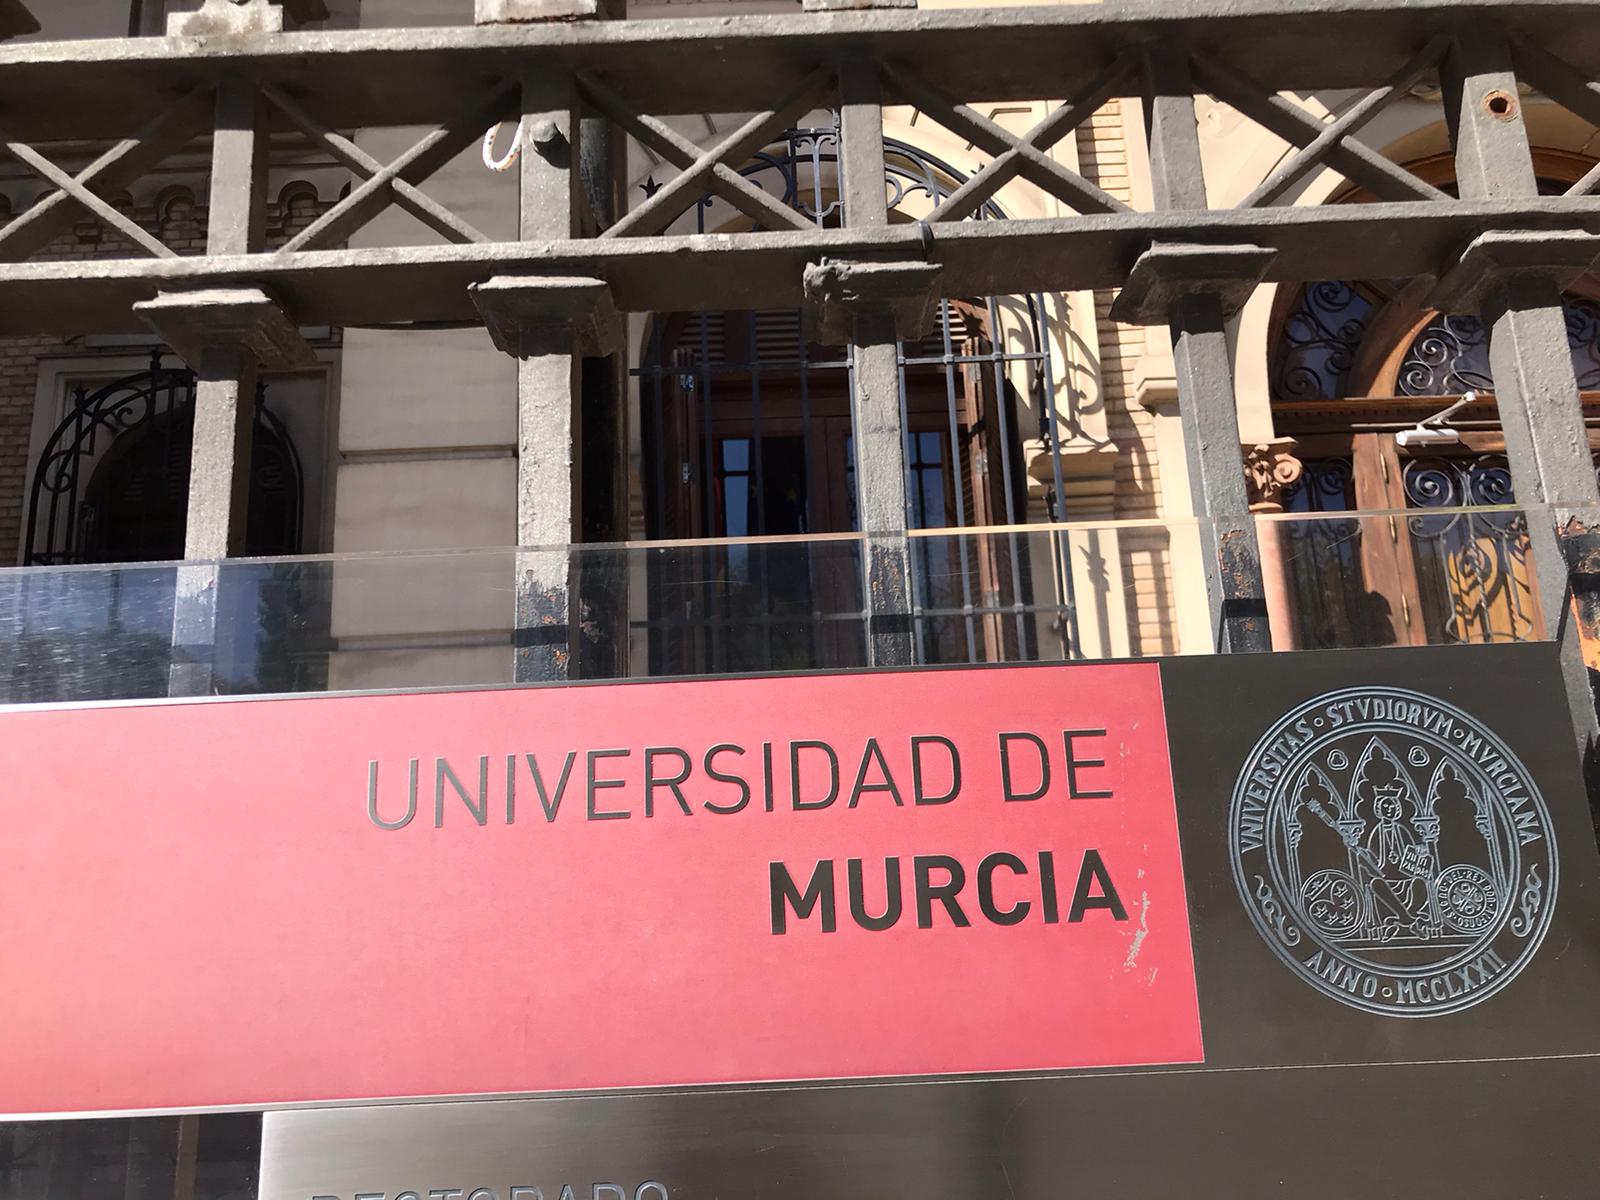 The University of Murcia